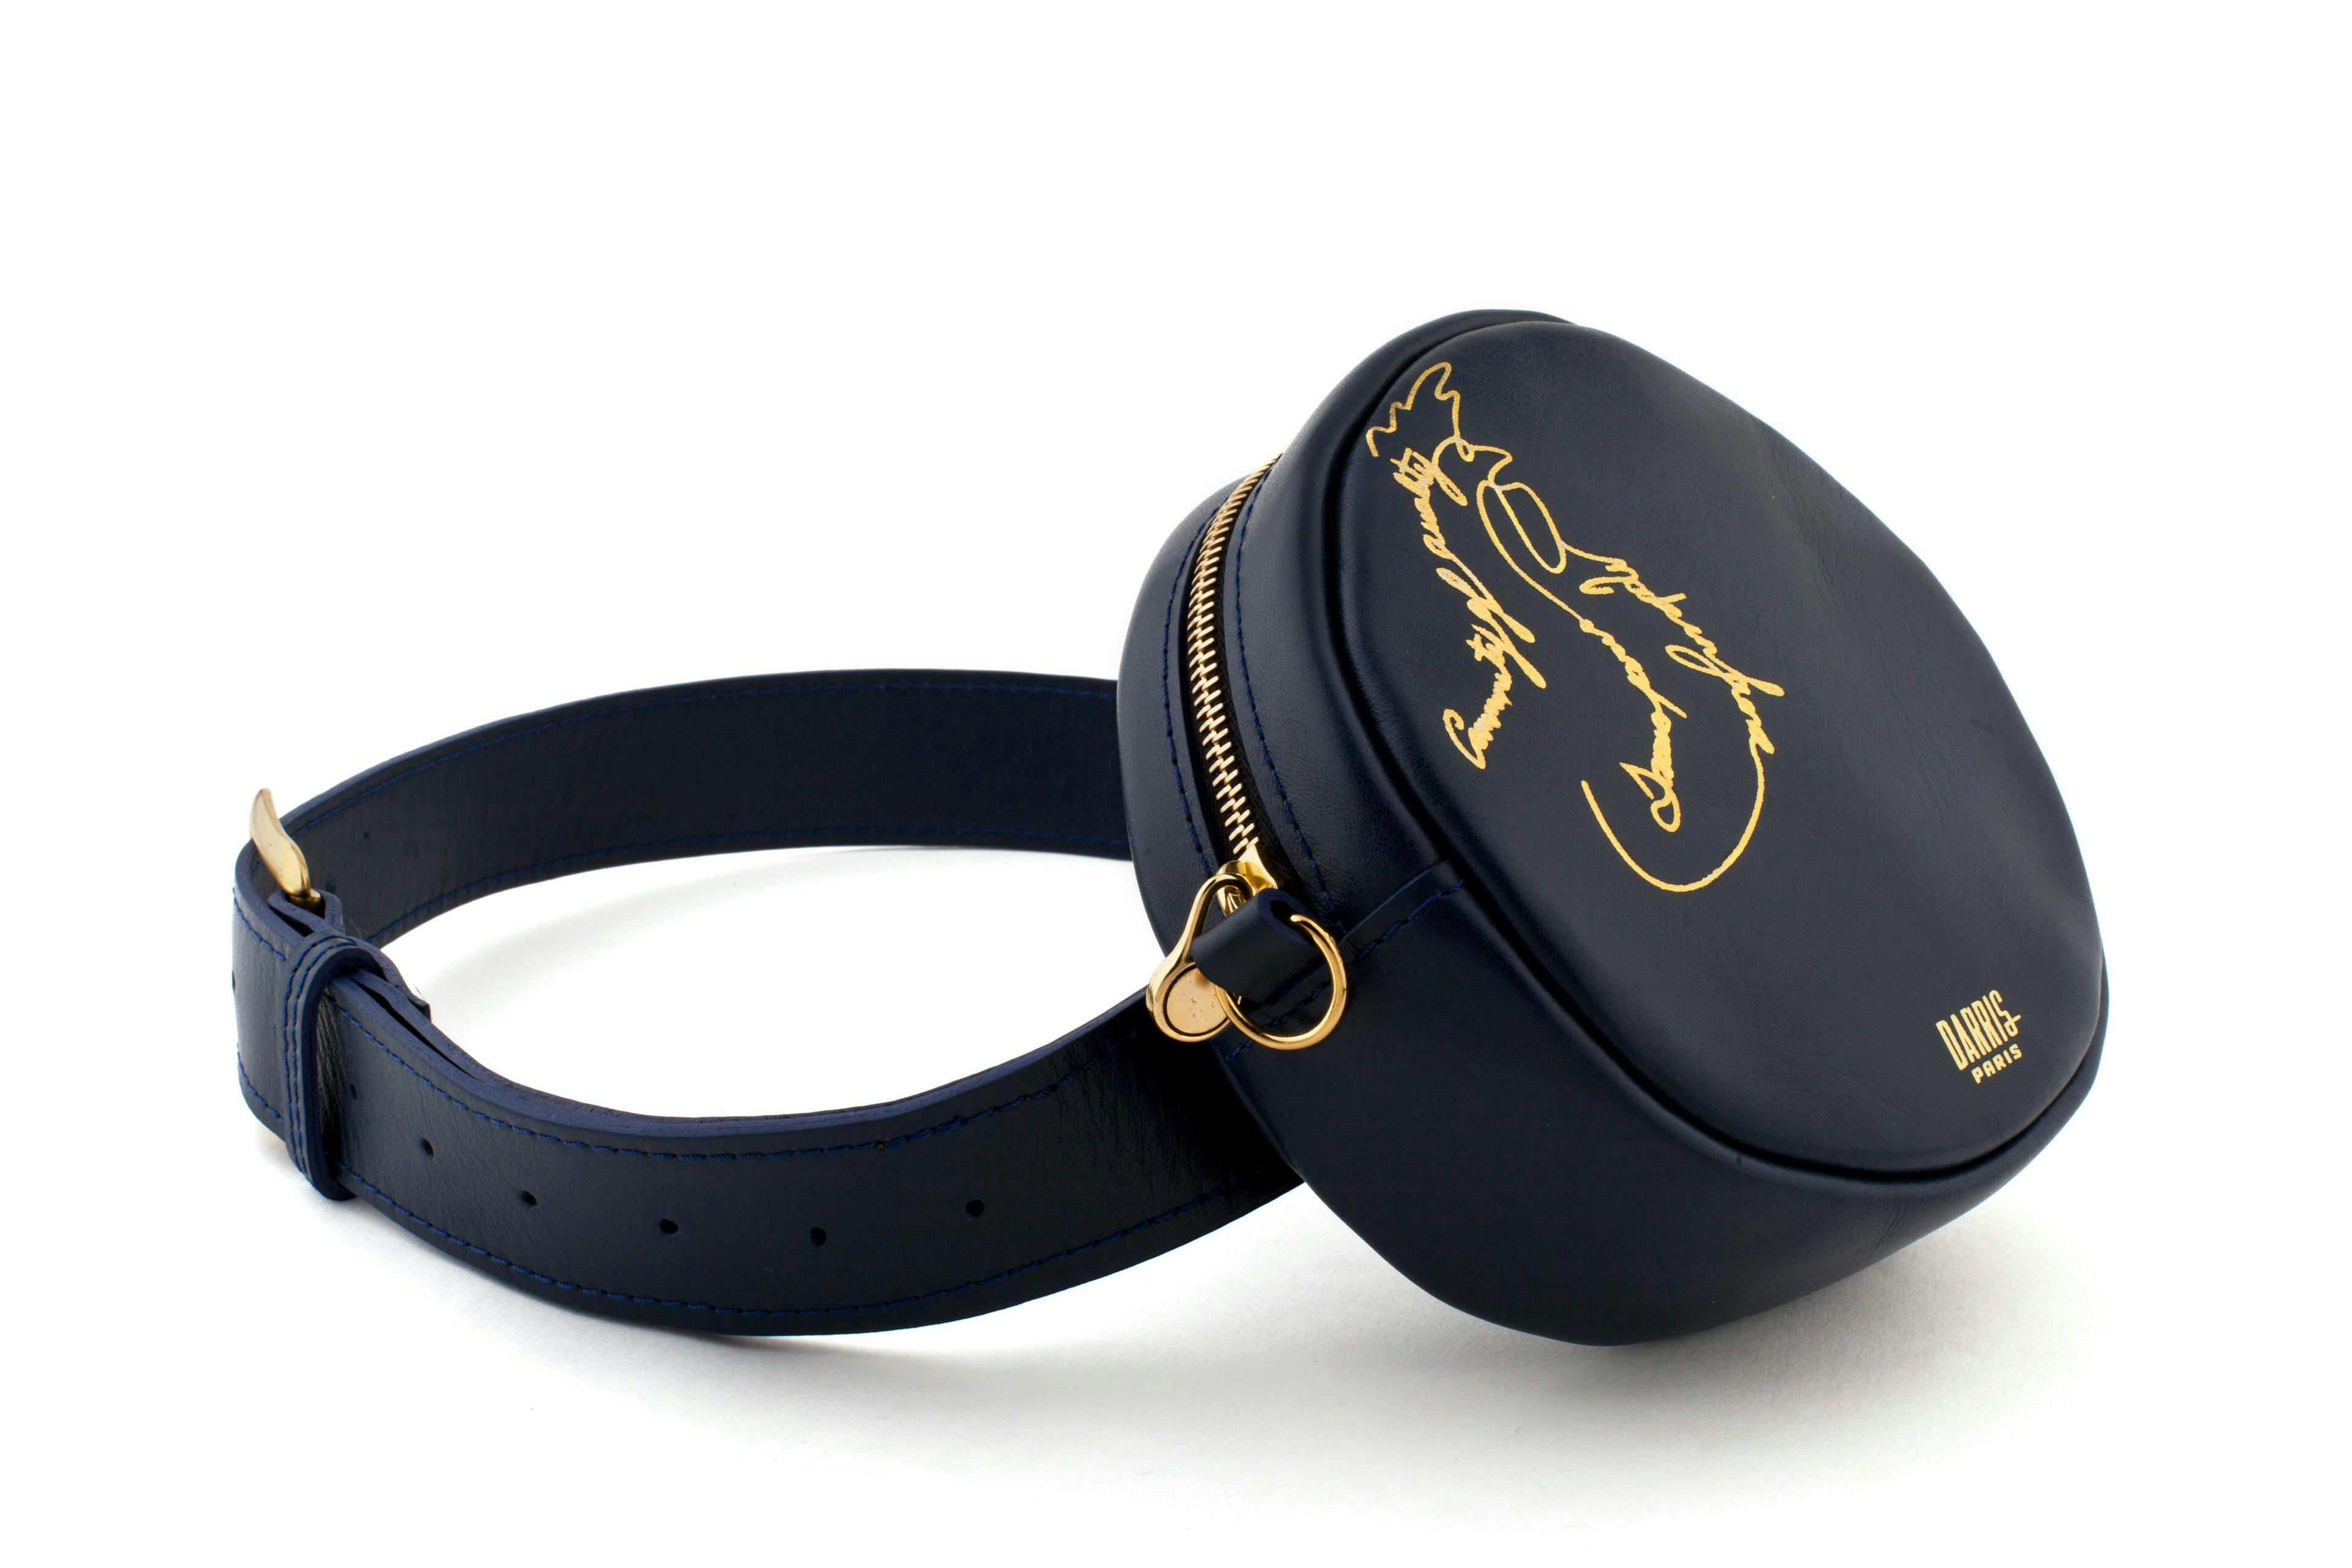 strap belt accessories accessory baseball cap clothing hat cap apparel buckle